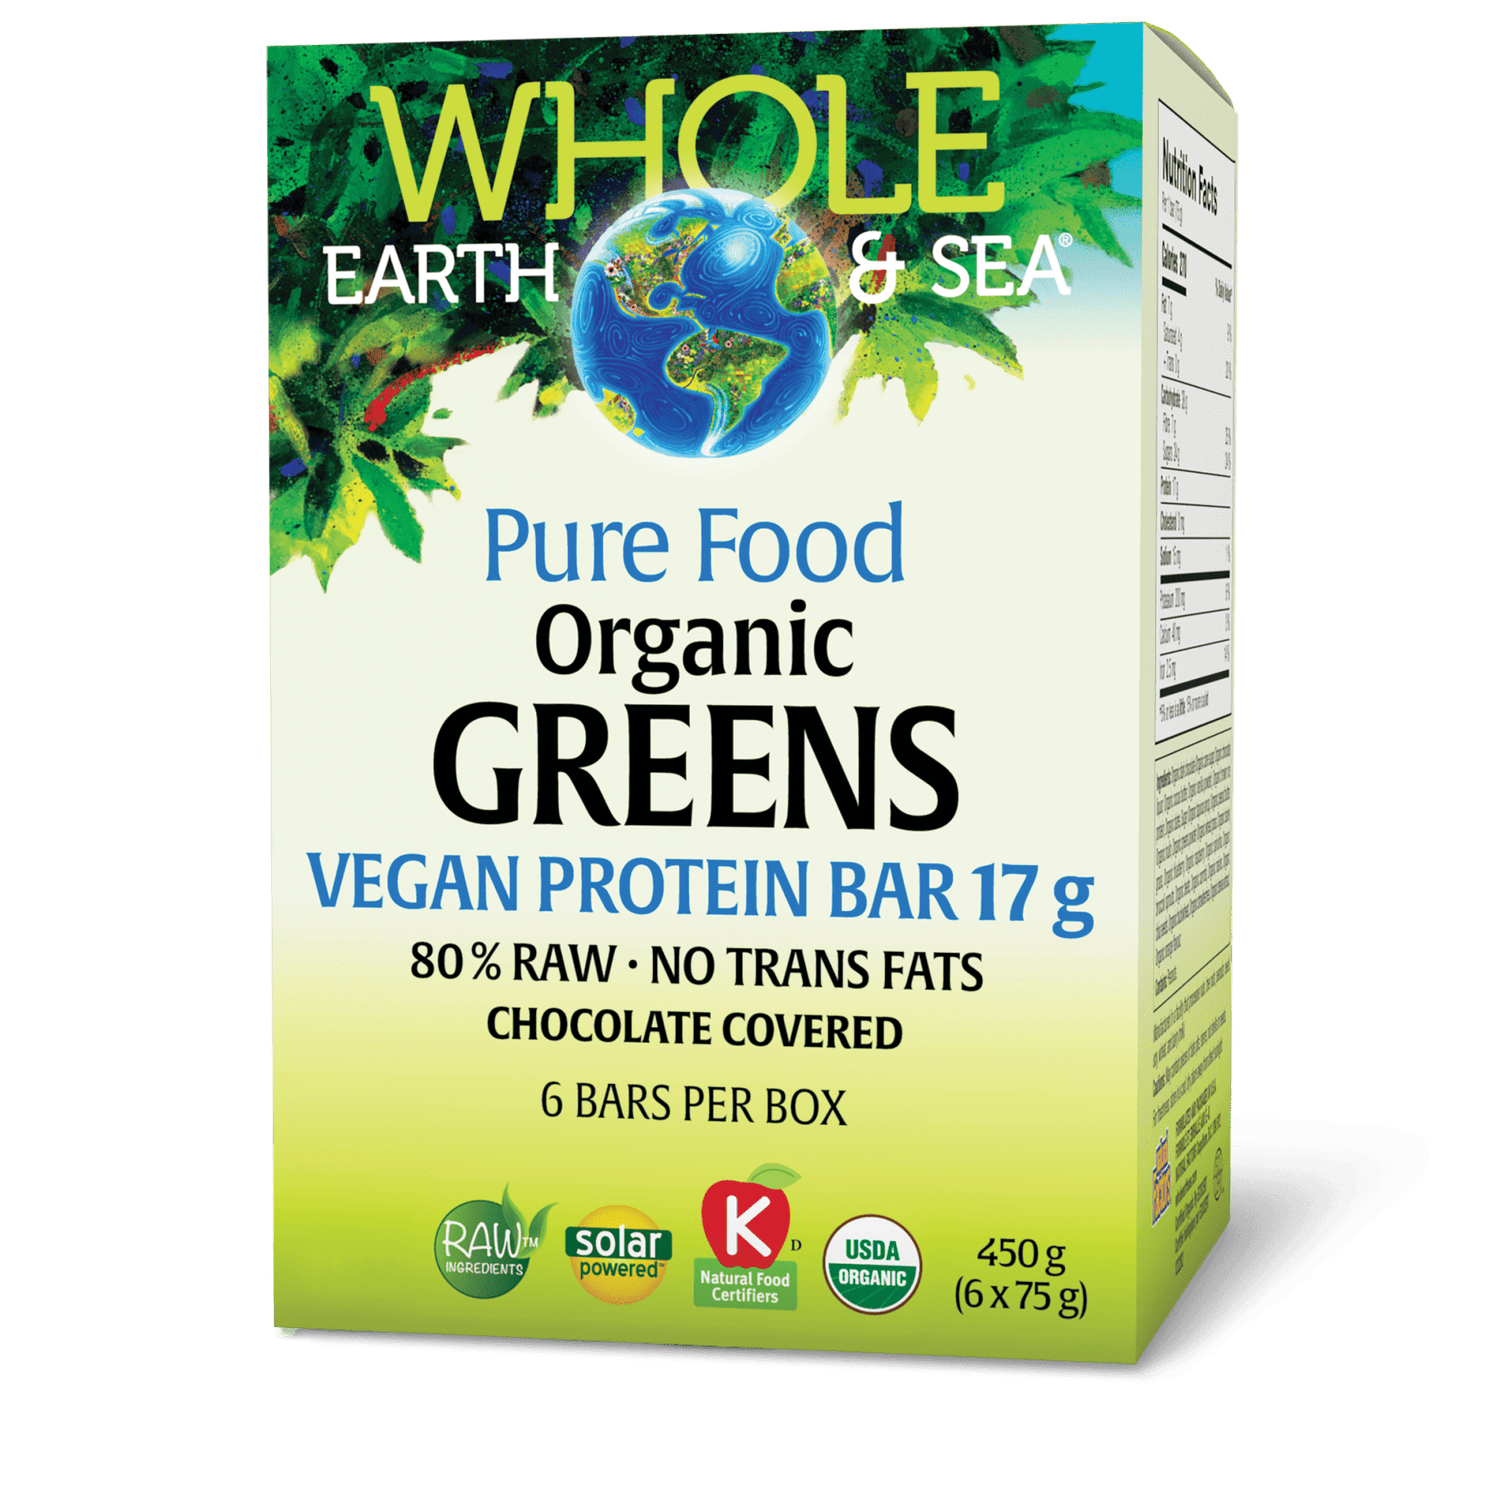 Organic Greens Vegan Protein Bar 17 g, Whole Earth & Sea, Whole Earth & Sea®|v|image|35506